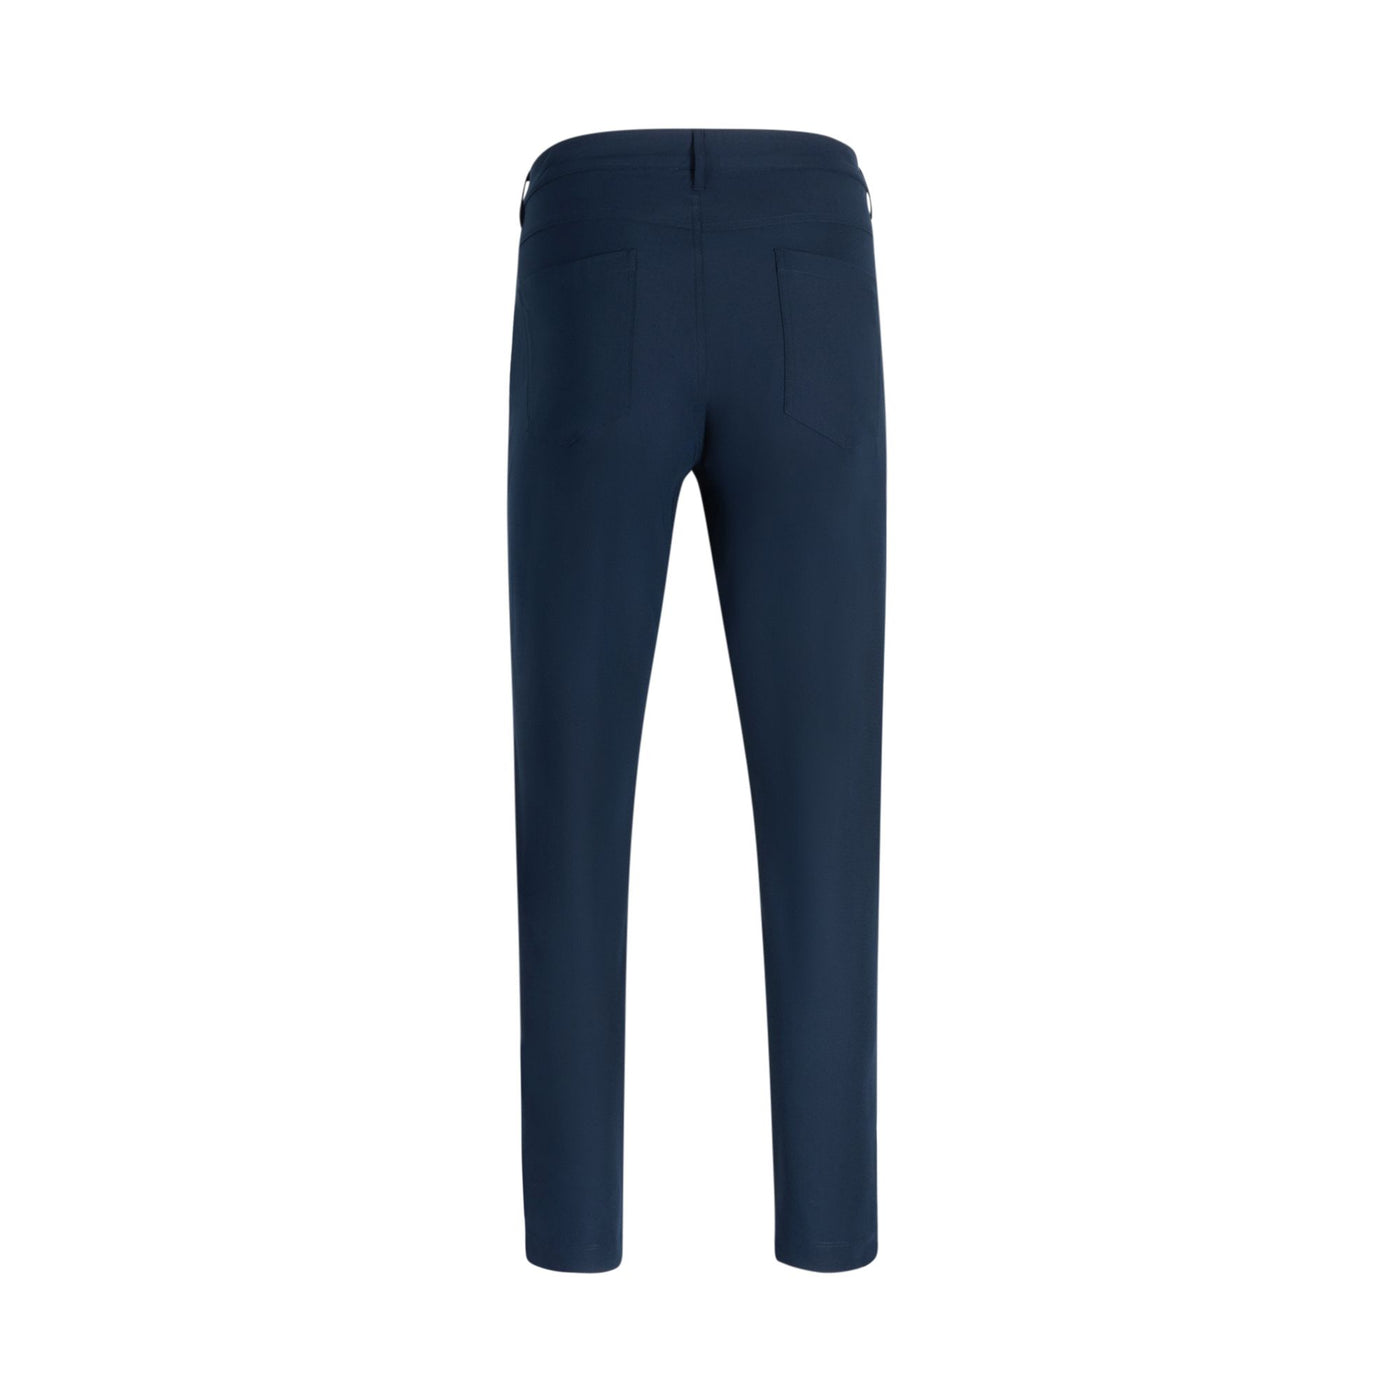 Men's 5-Pocket Performance Pants - Blue